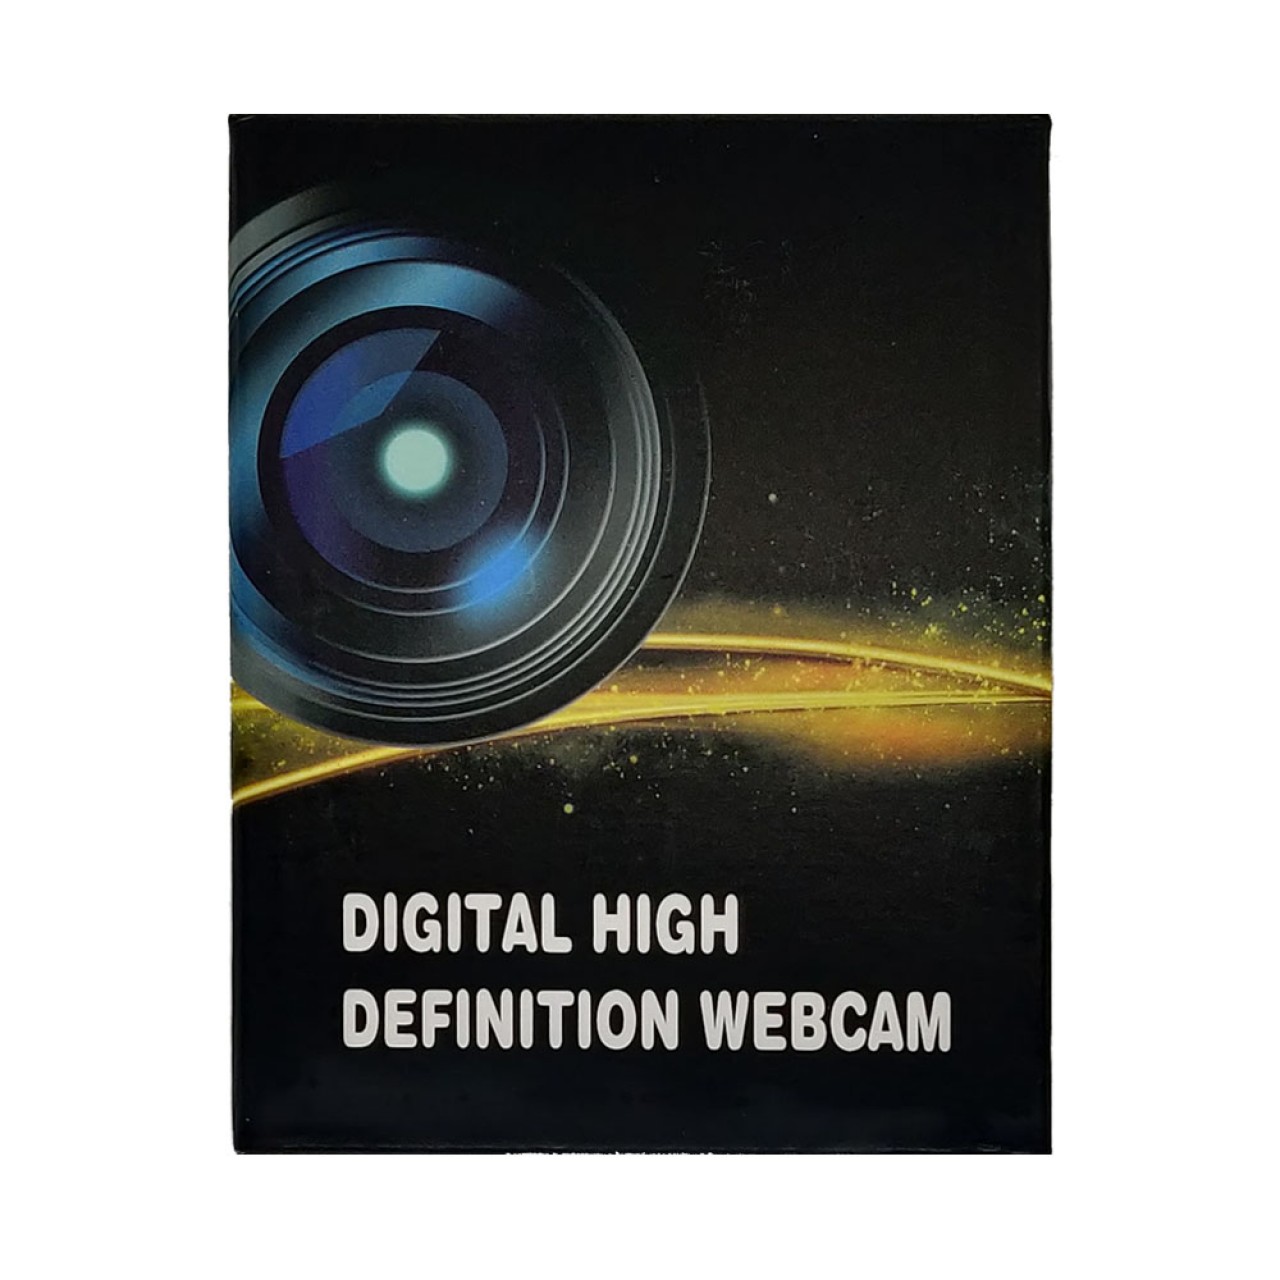 S-01 - USB Web Cam 1080p BLACK - USB Κάμερα 1080p ανάλυσης - ΜΑΥΡΗ